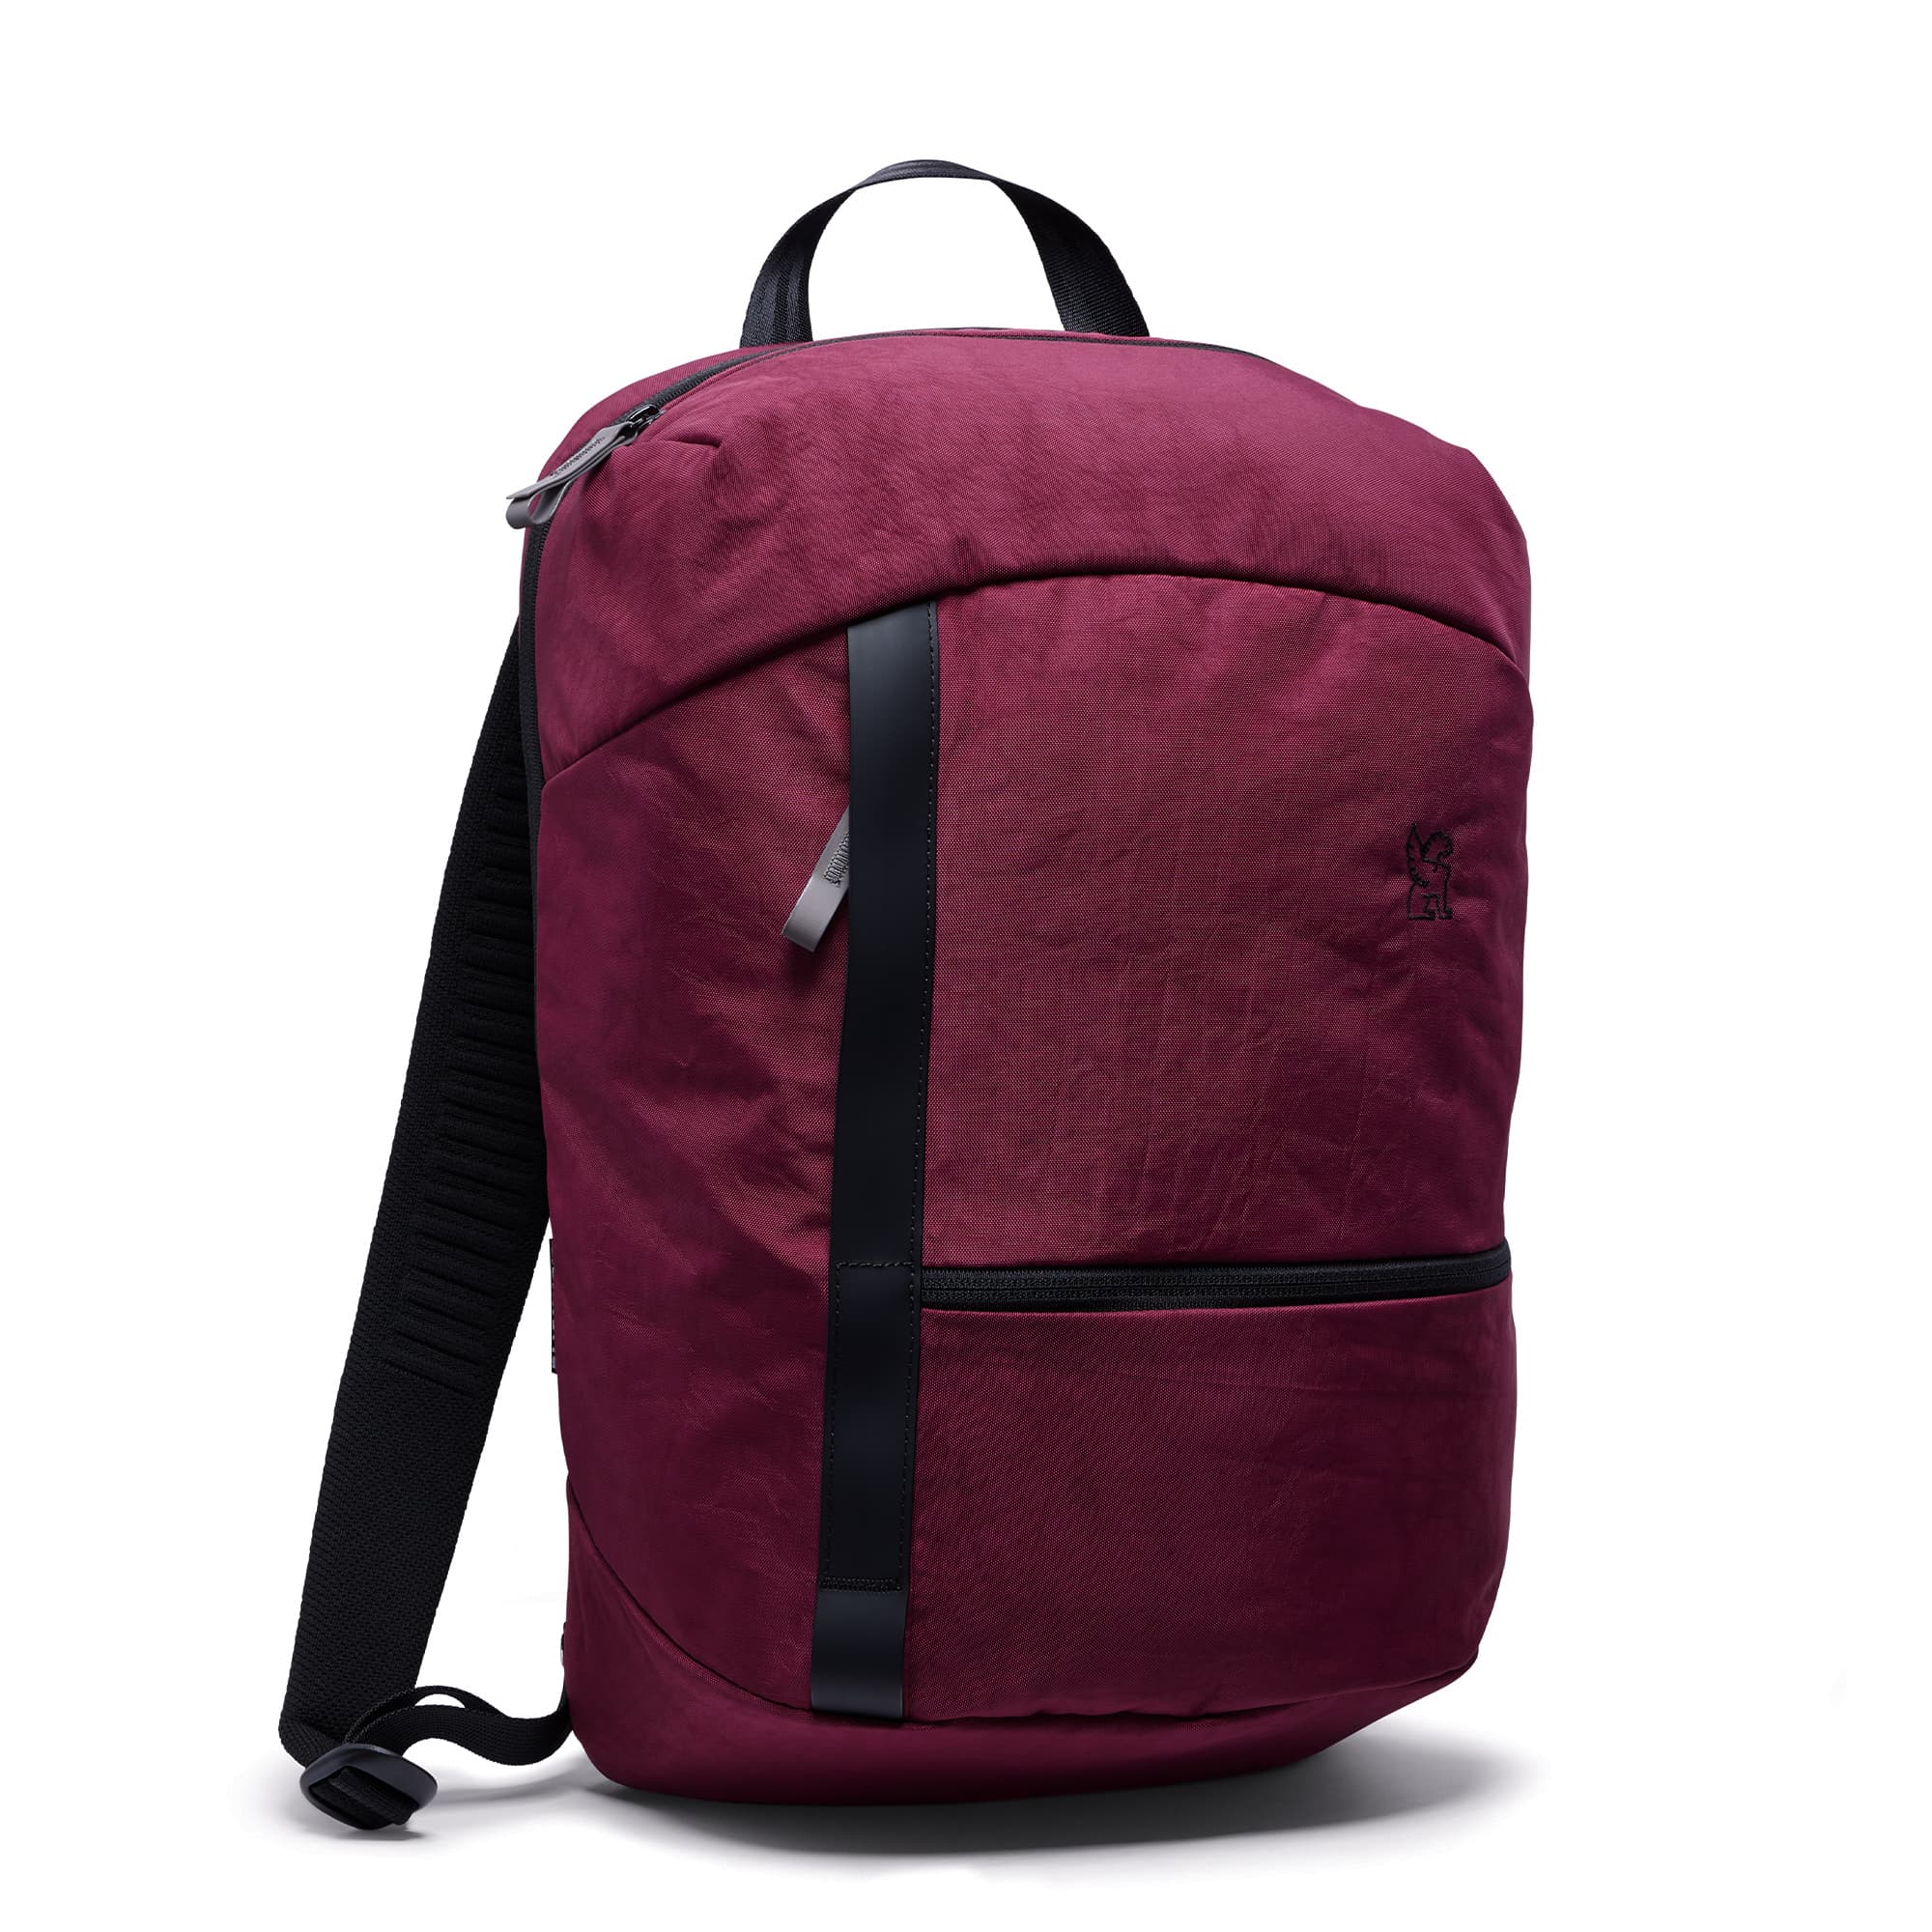 Camden backpack in royale #color_royale